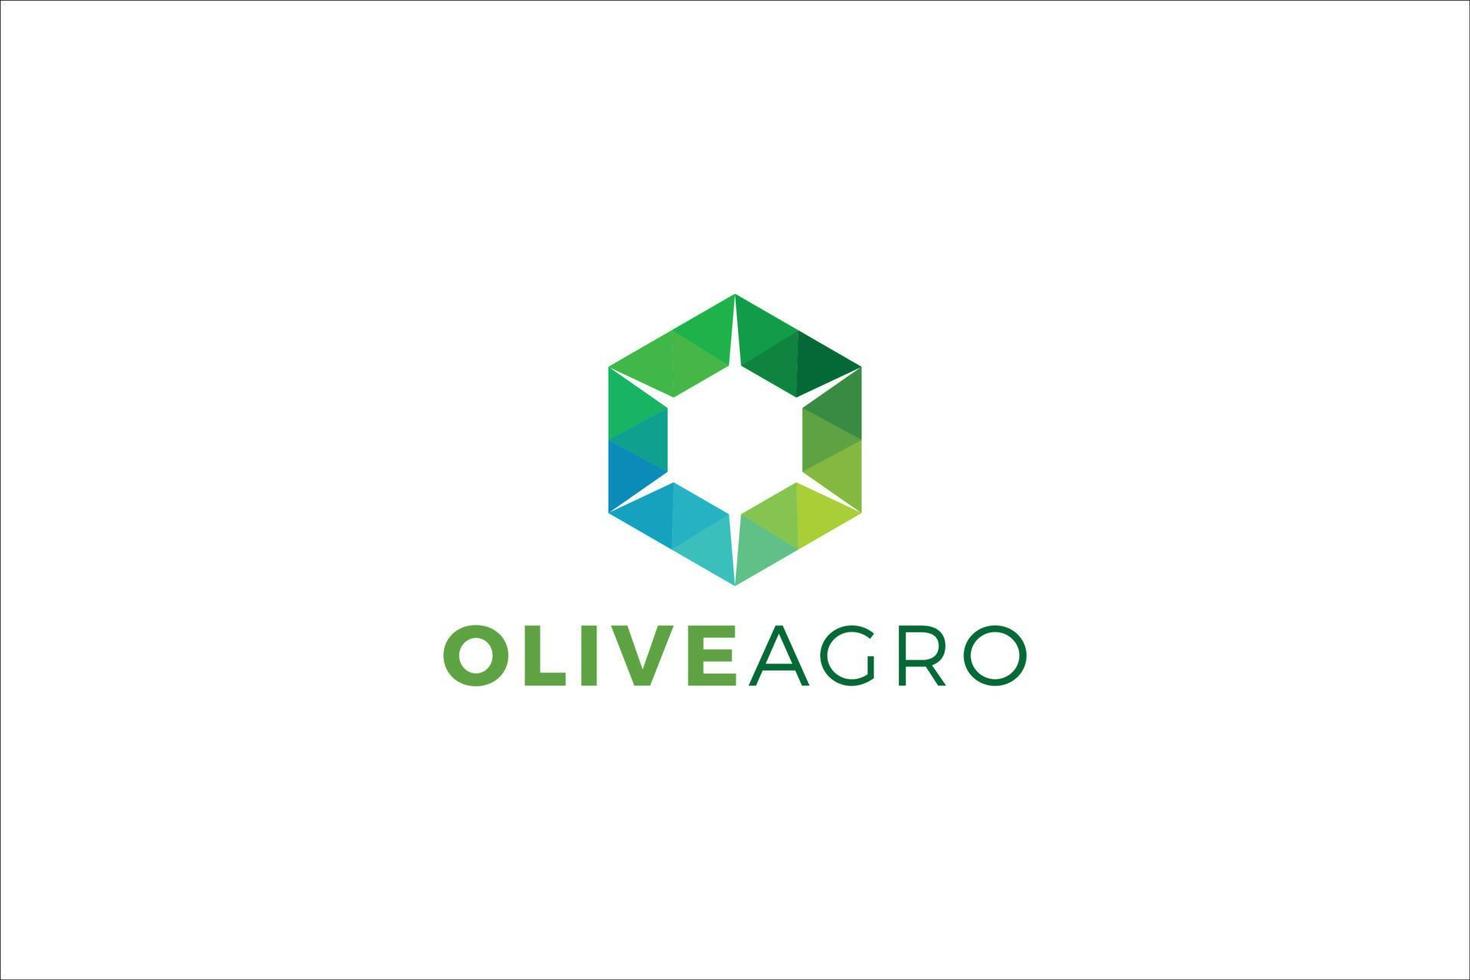 lettre o logo hexagonal vert pour entreprise vecteur